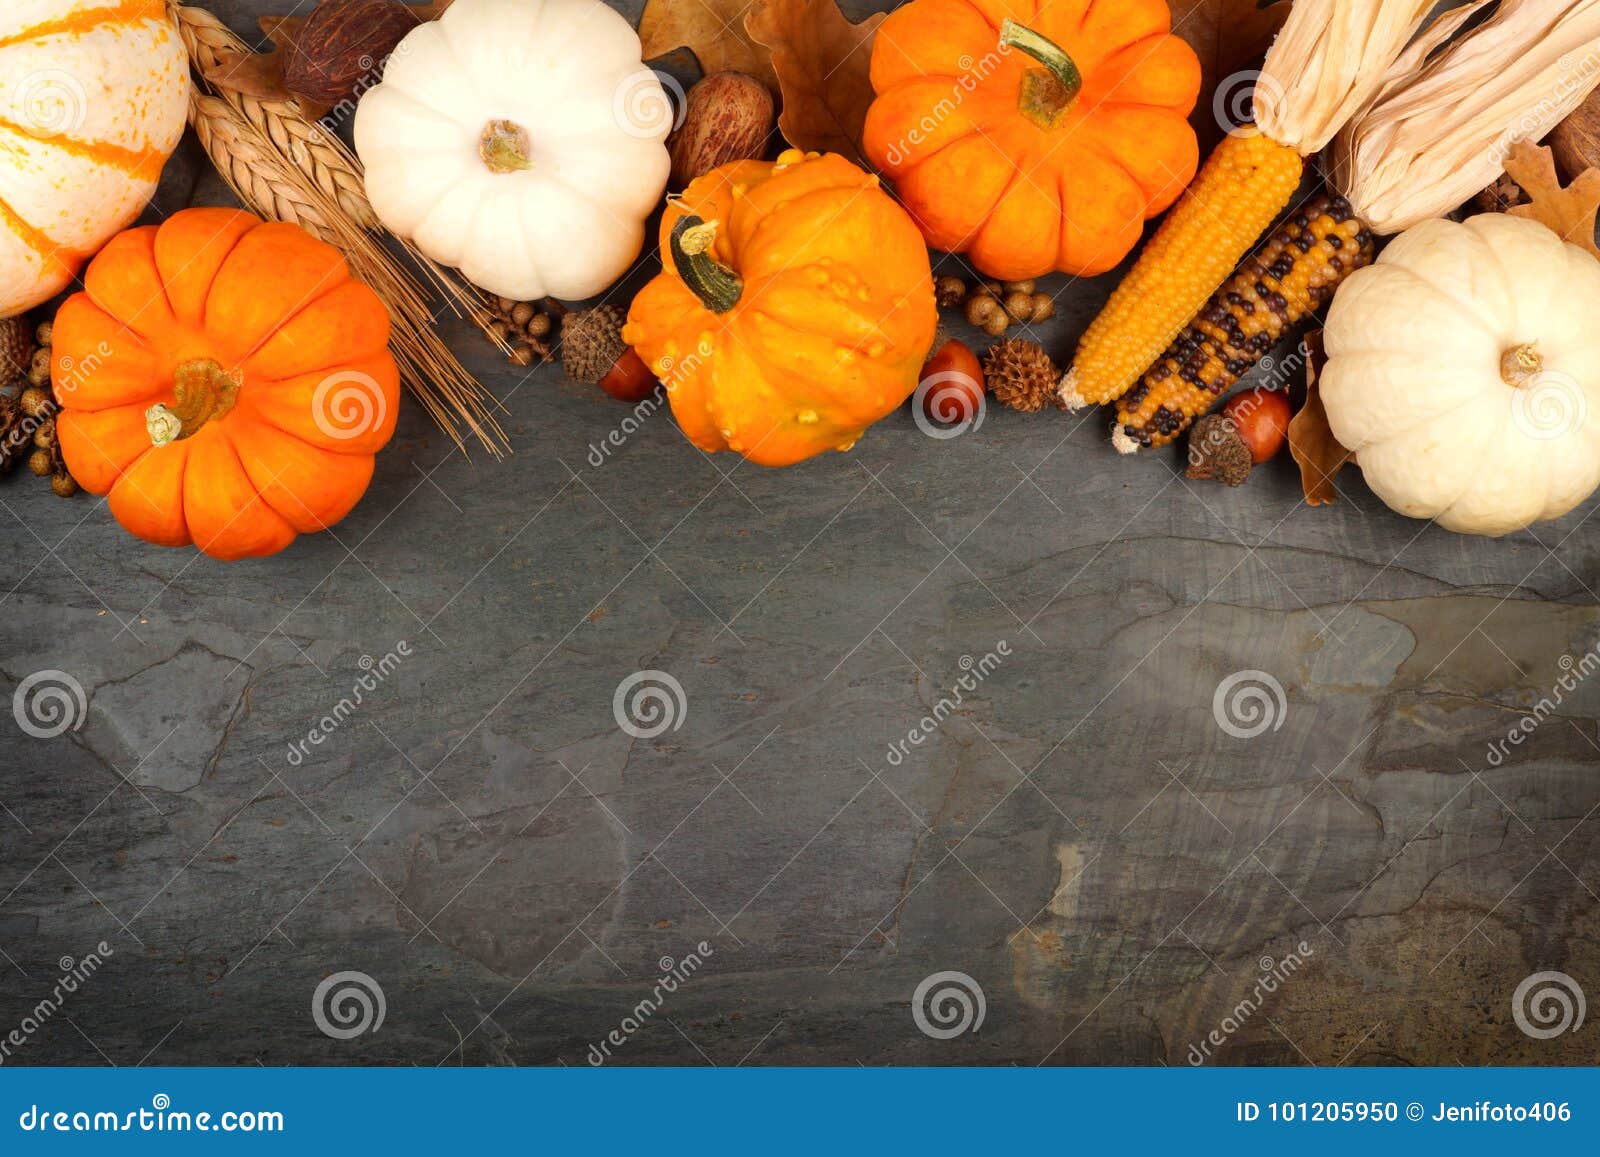 autumn harvest top border over a slate background